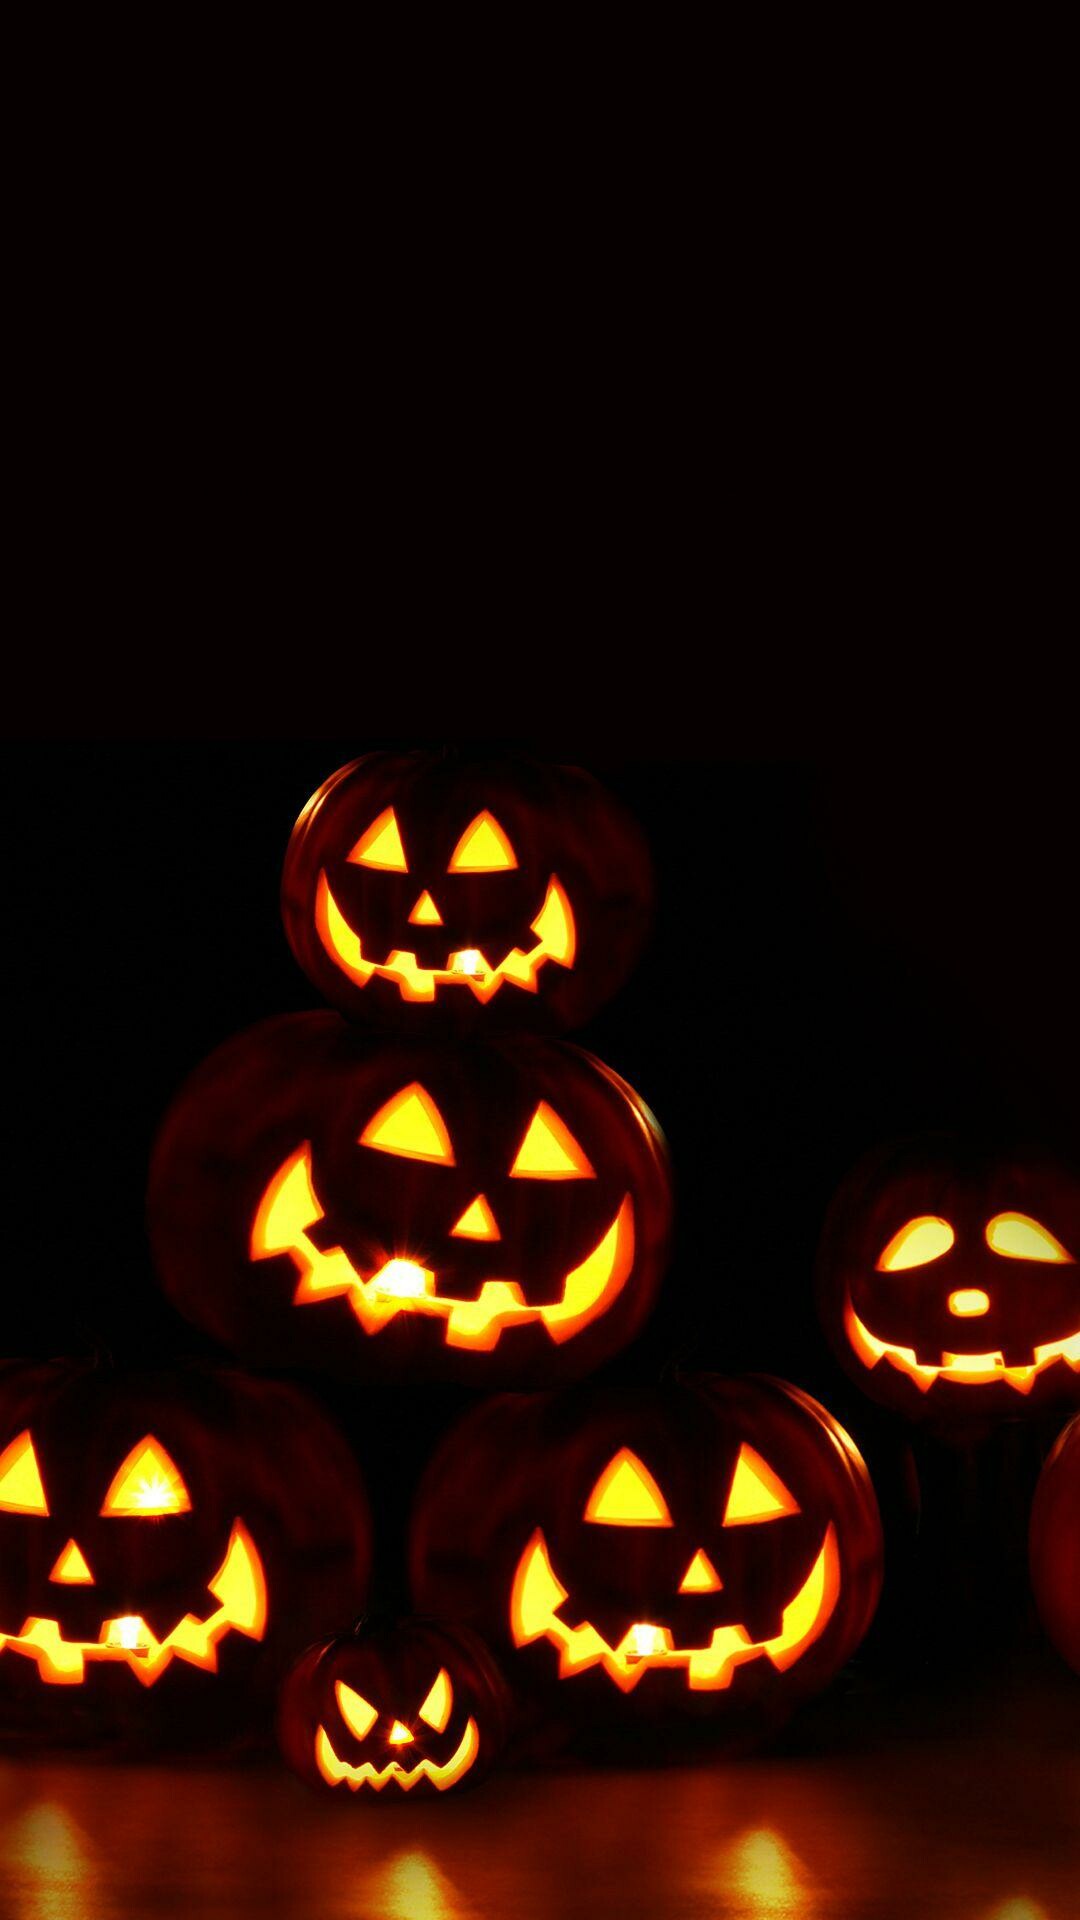 Halloween: Jack-o'-lantern, Traditional symbol. 1080x1920 Full HD Wallpaper.